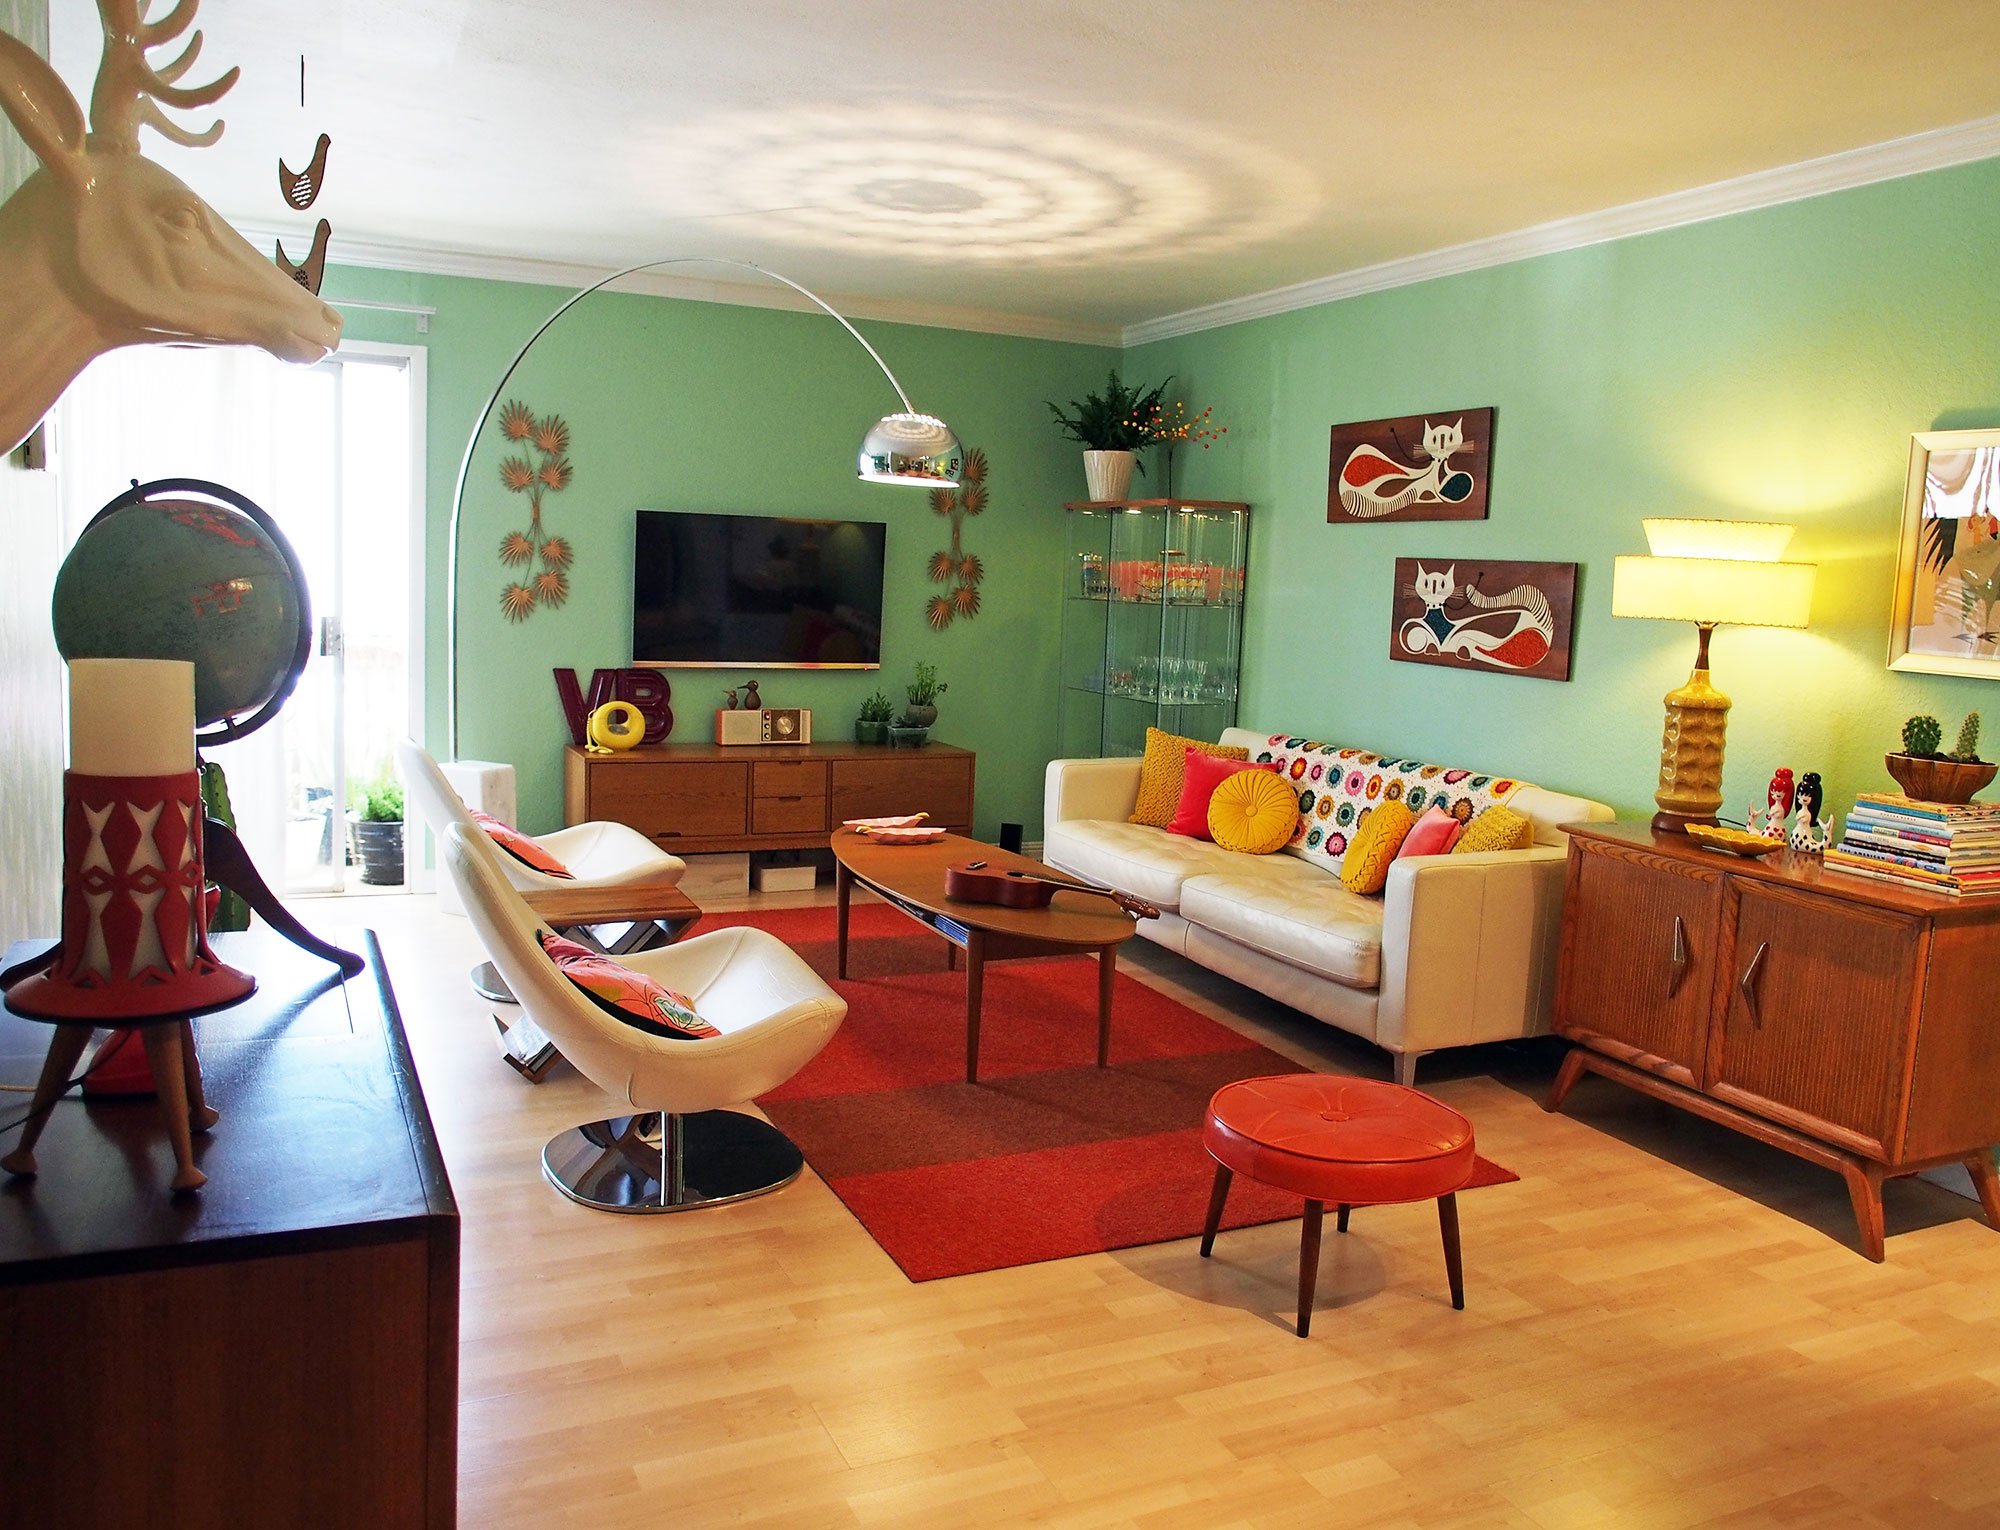 75 Creative DIY Farmhouse Living Room Decorating Ideas